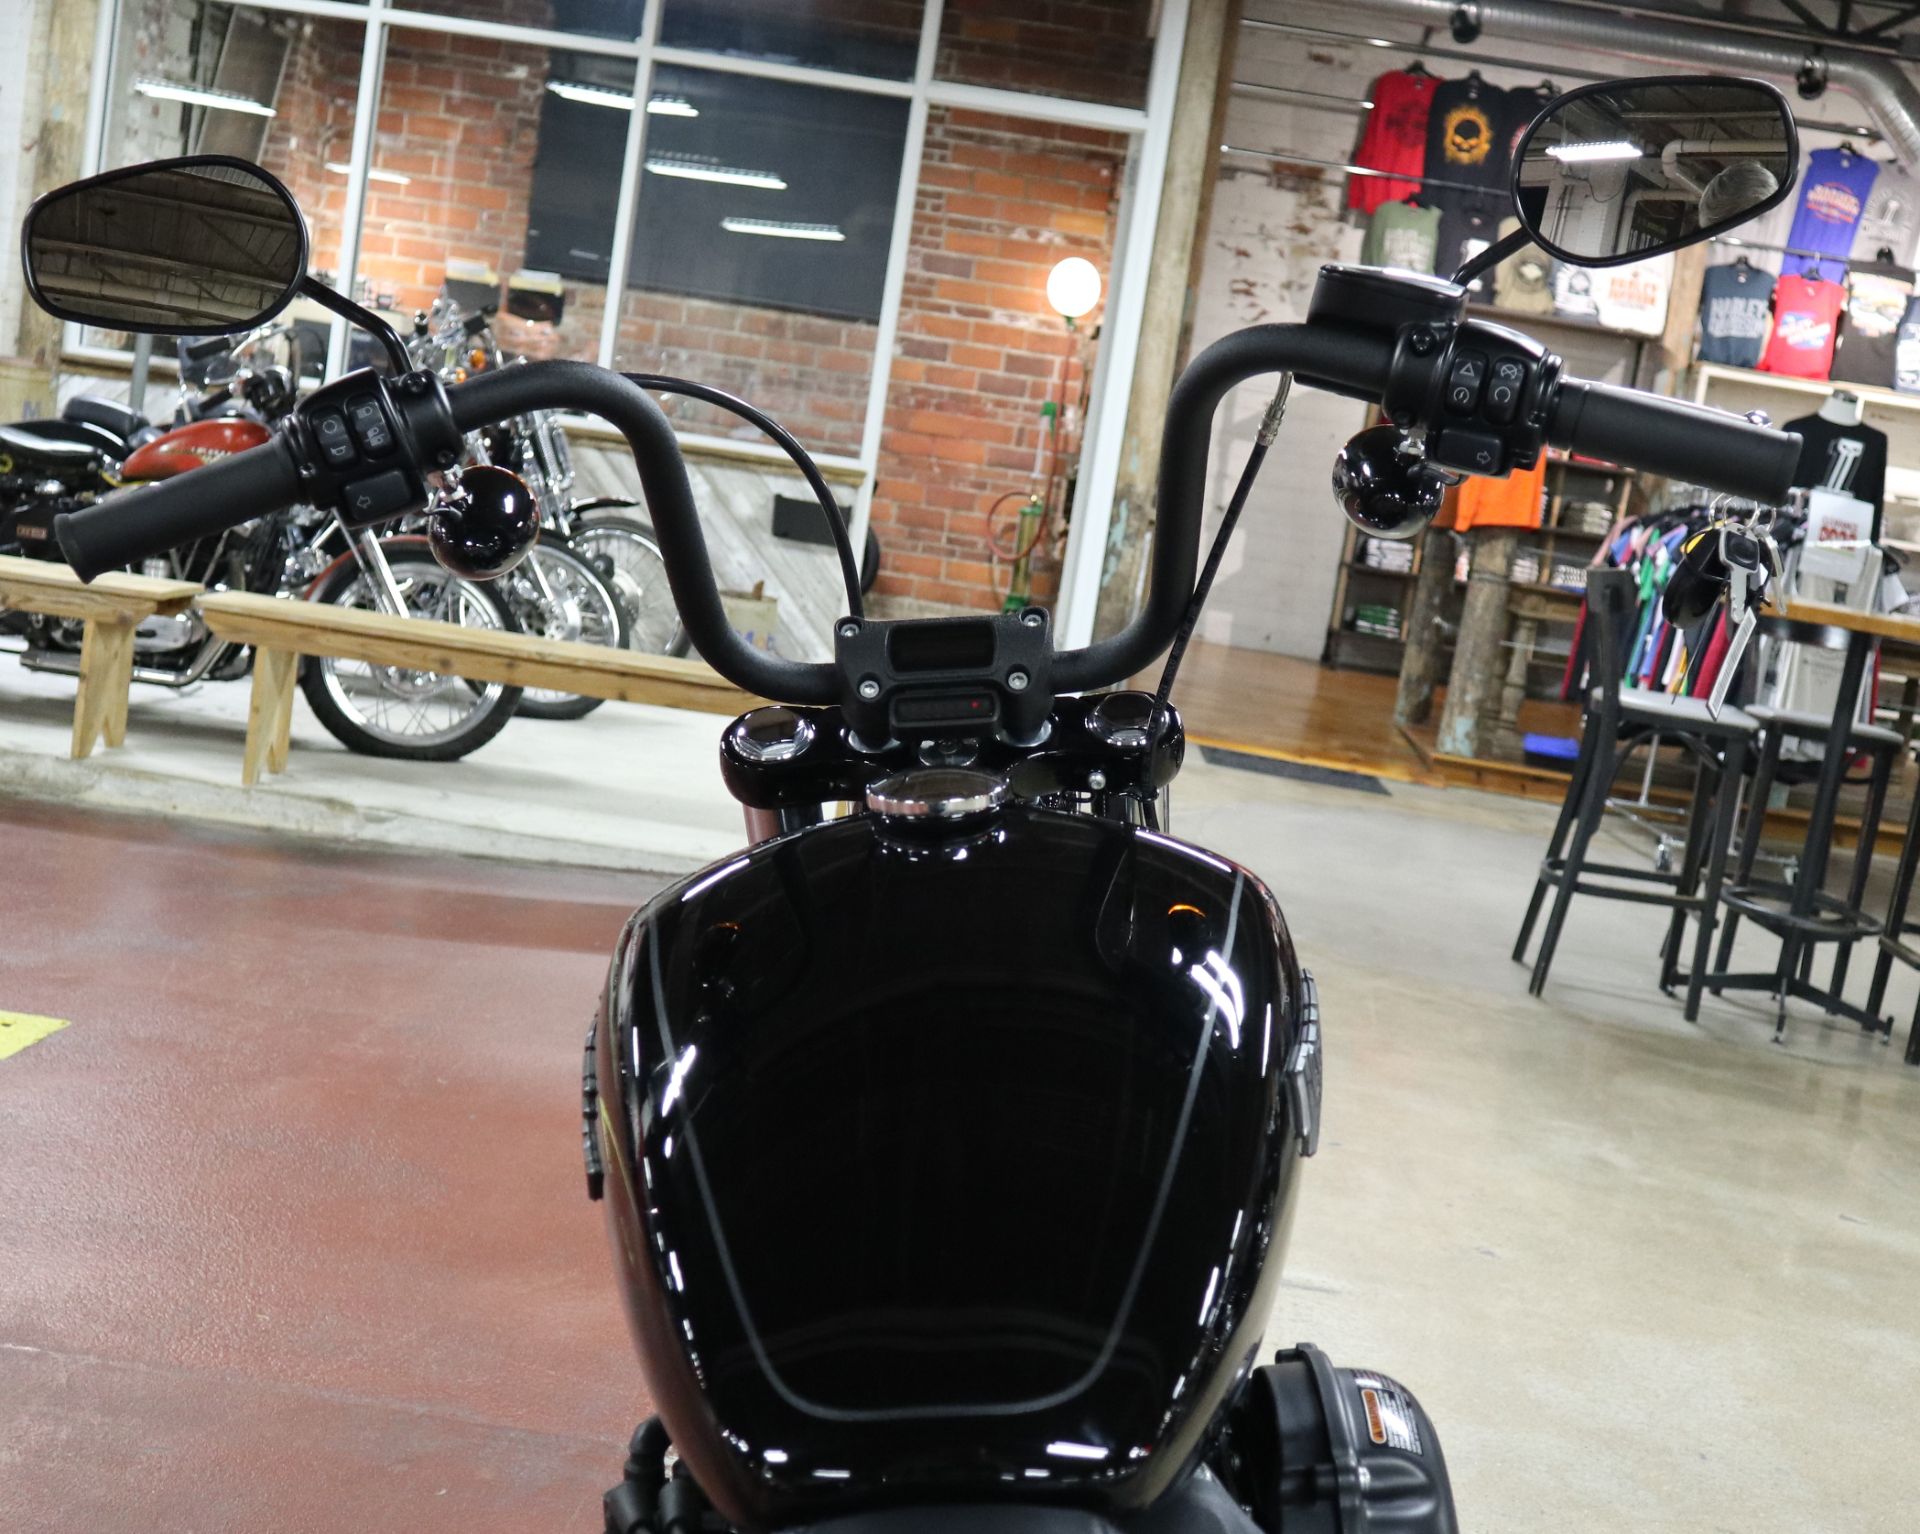 2019 Harley-Davidson Street Bob® in New London, Connecticut - Photo 11